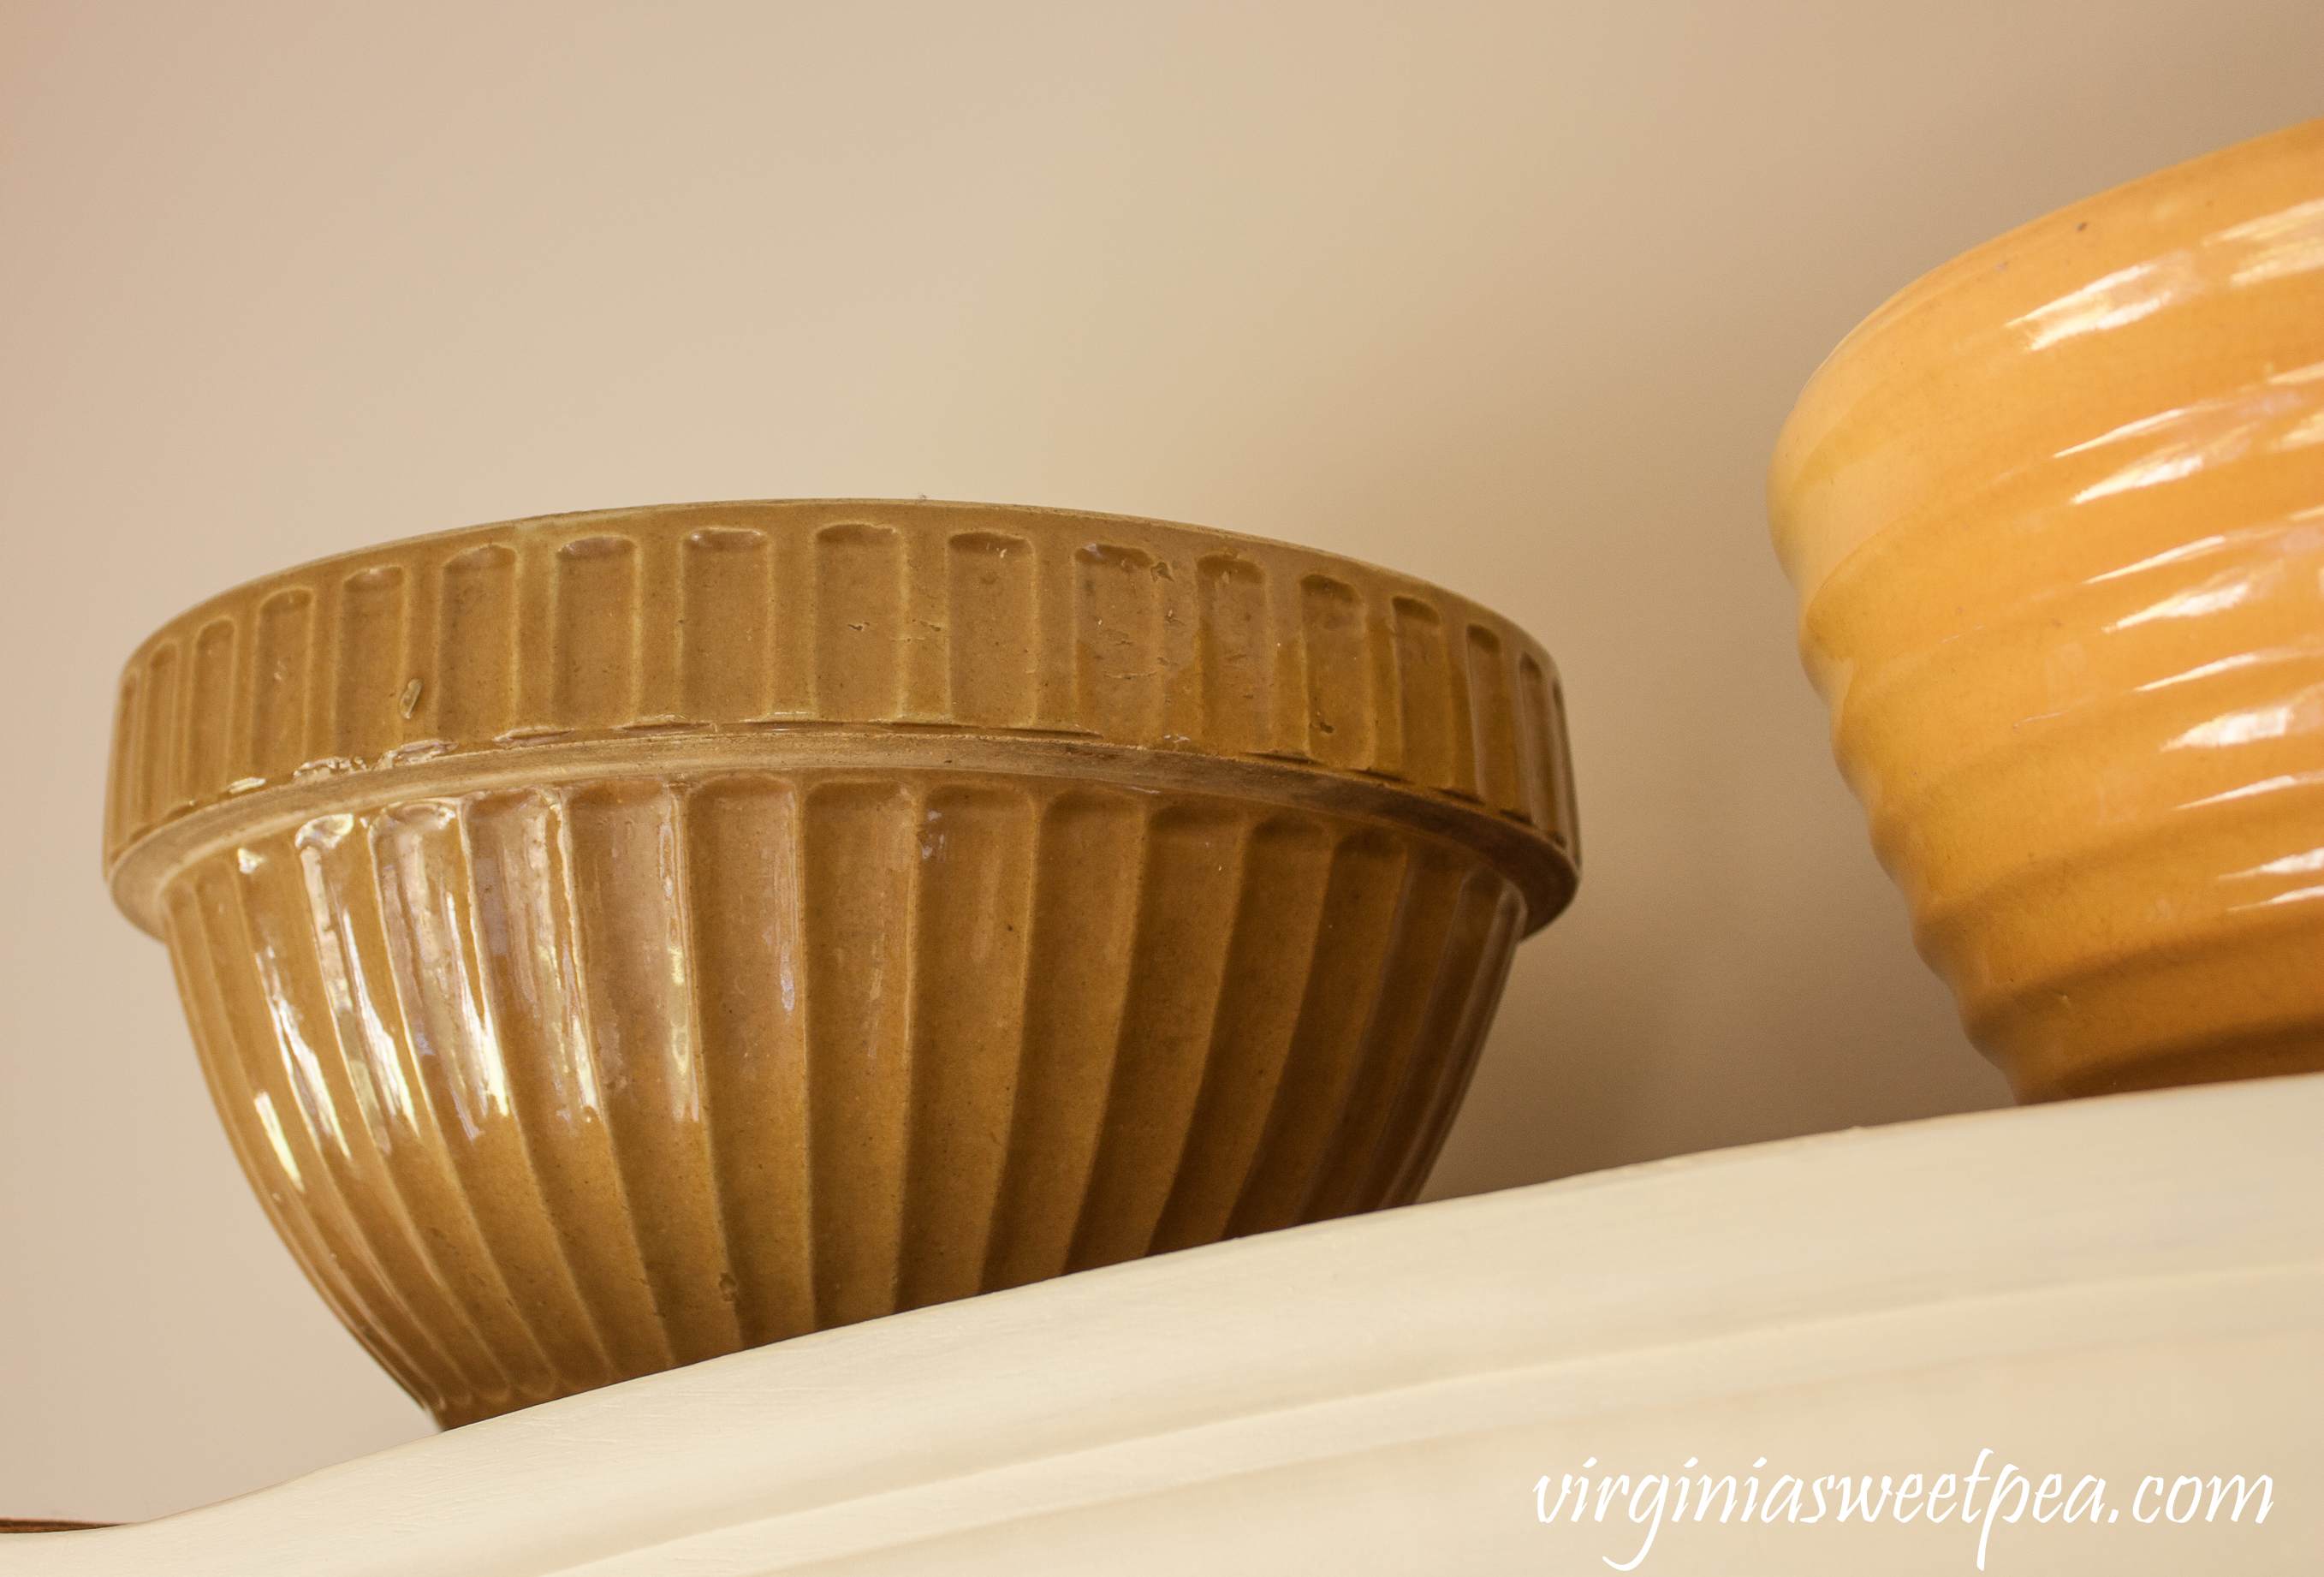 Vintage Mixing Bowl marked 12 #vintage #vintagemixingbowl #antiquemixingbowl